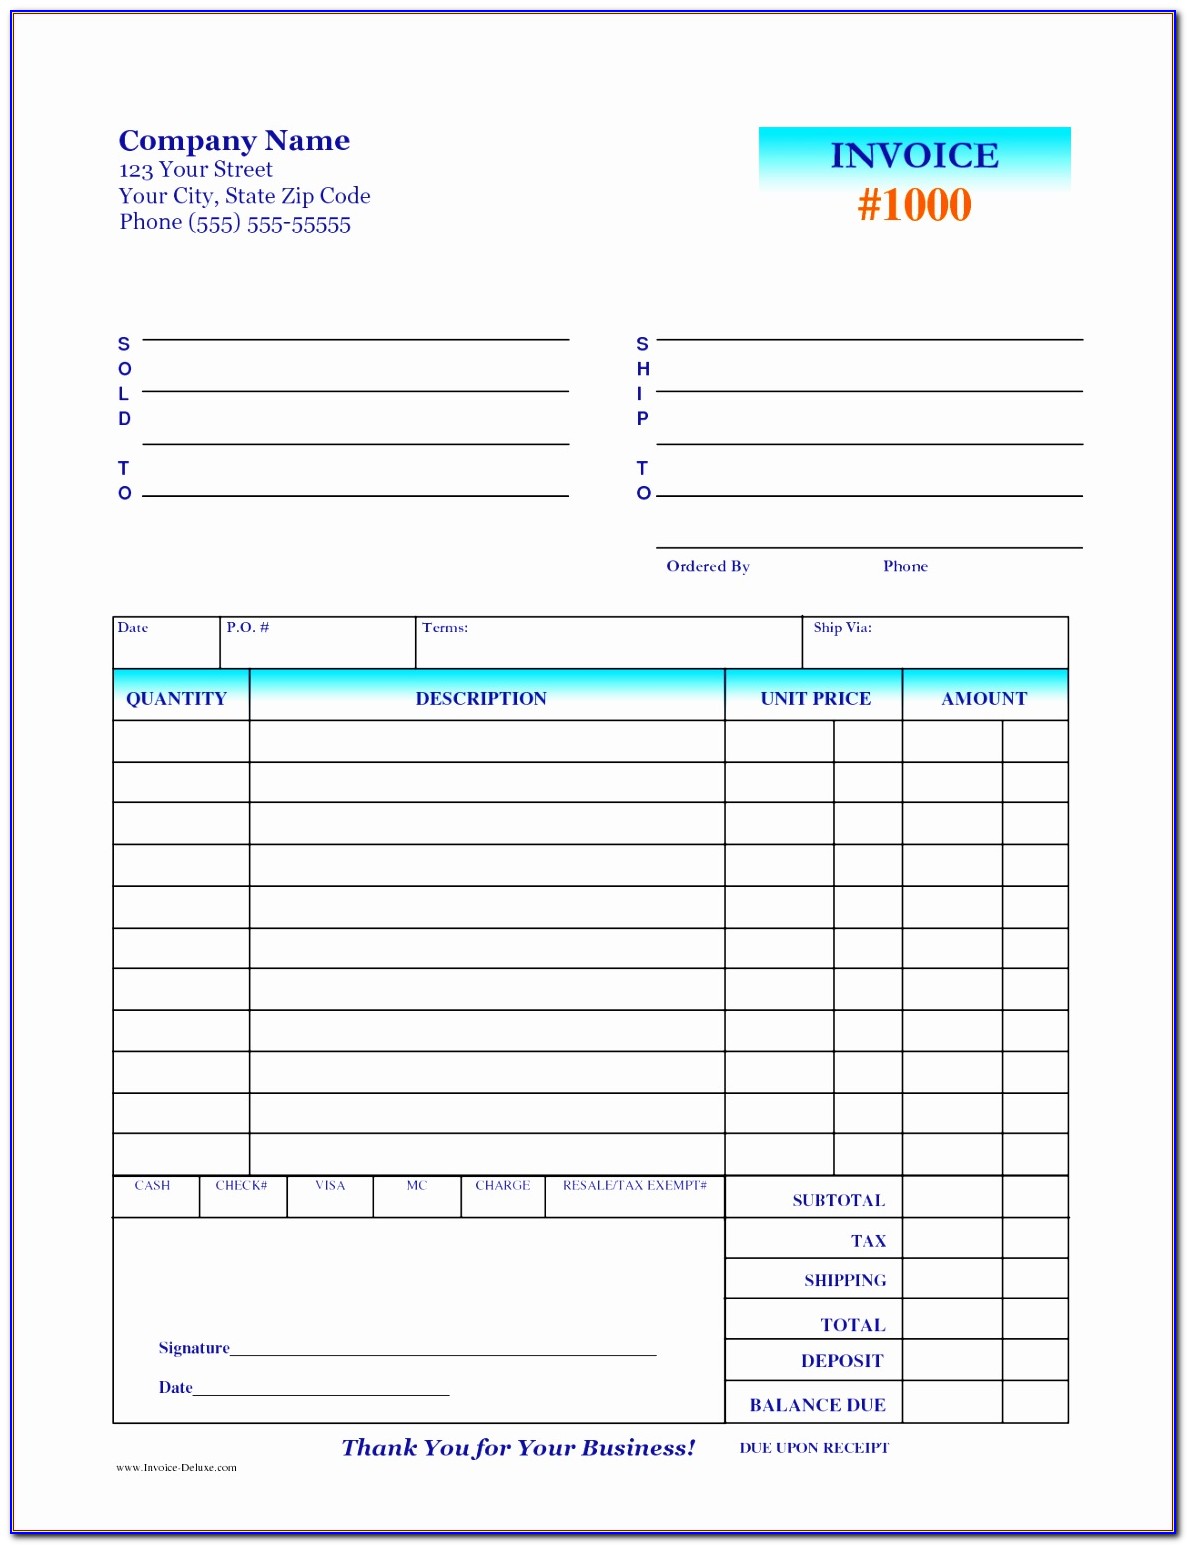 Accounts Receivable Invoice Example